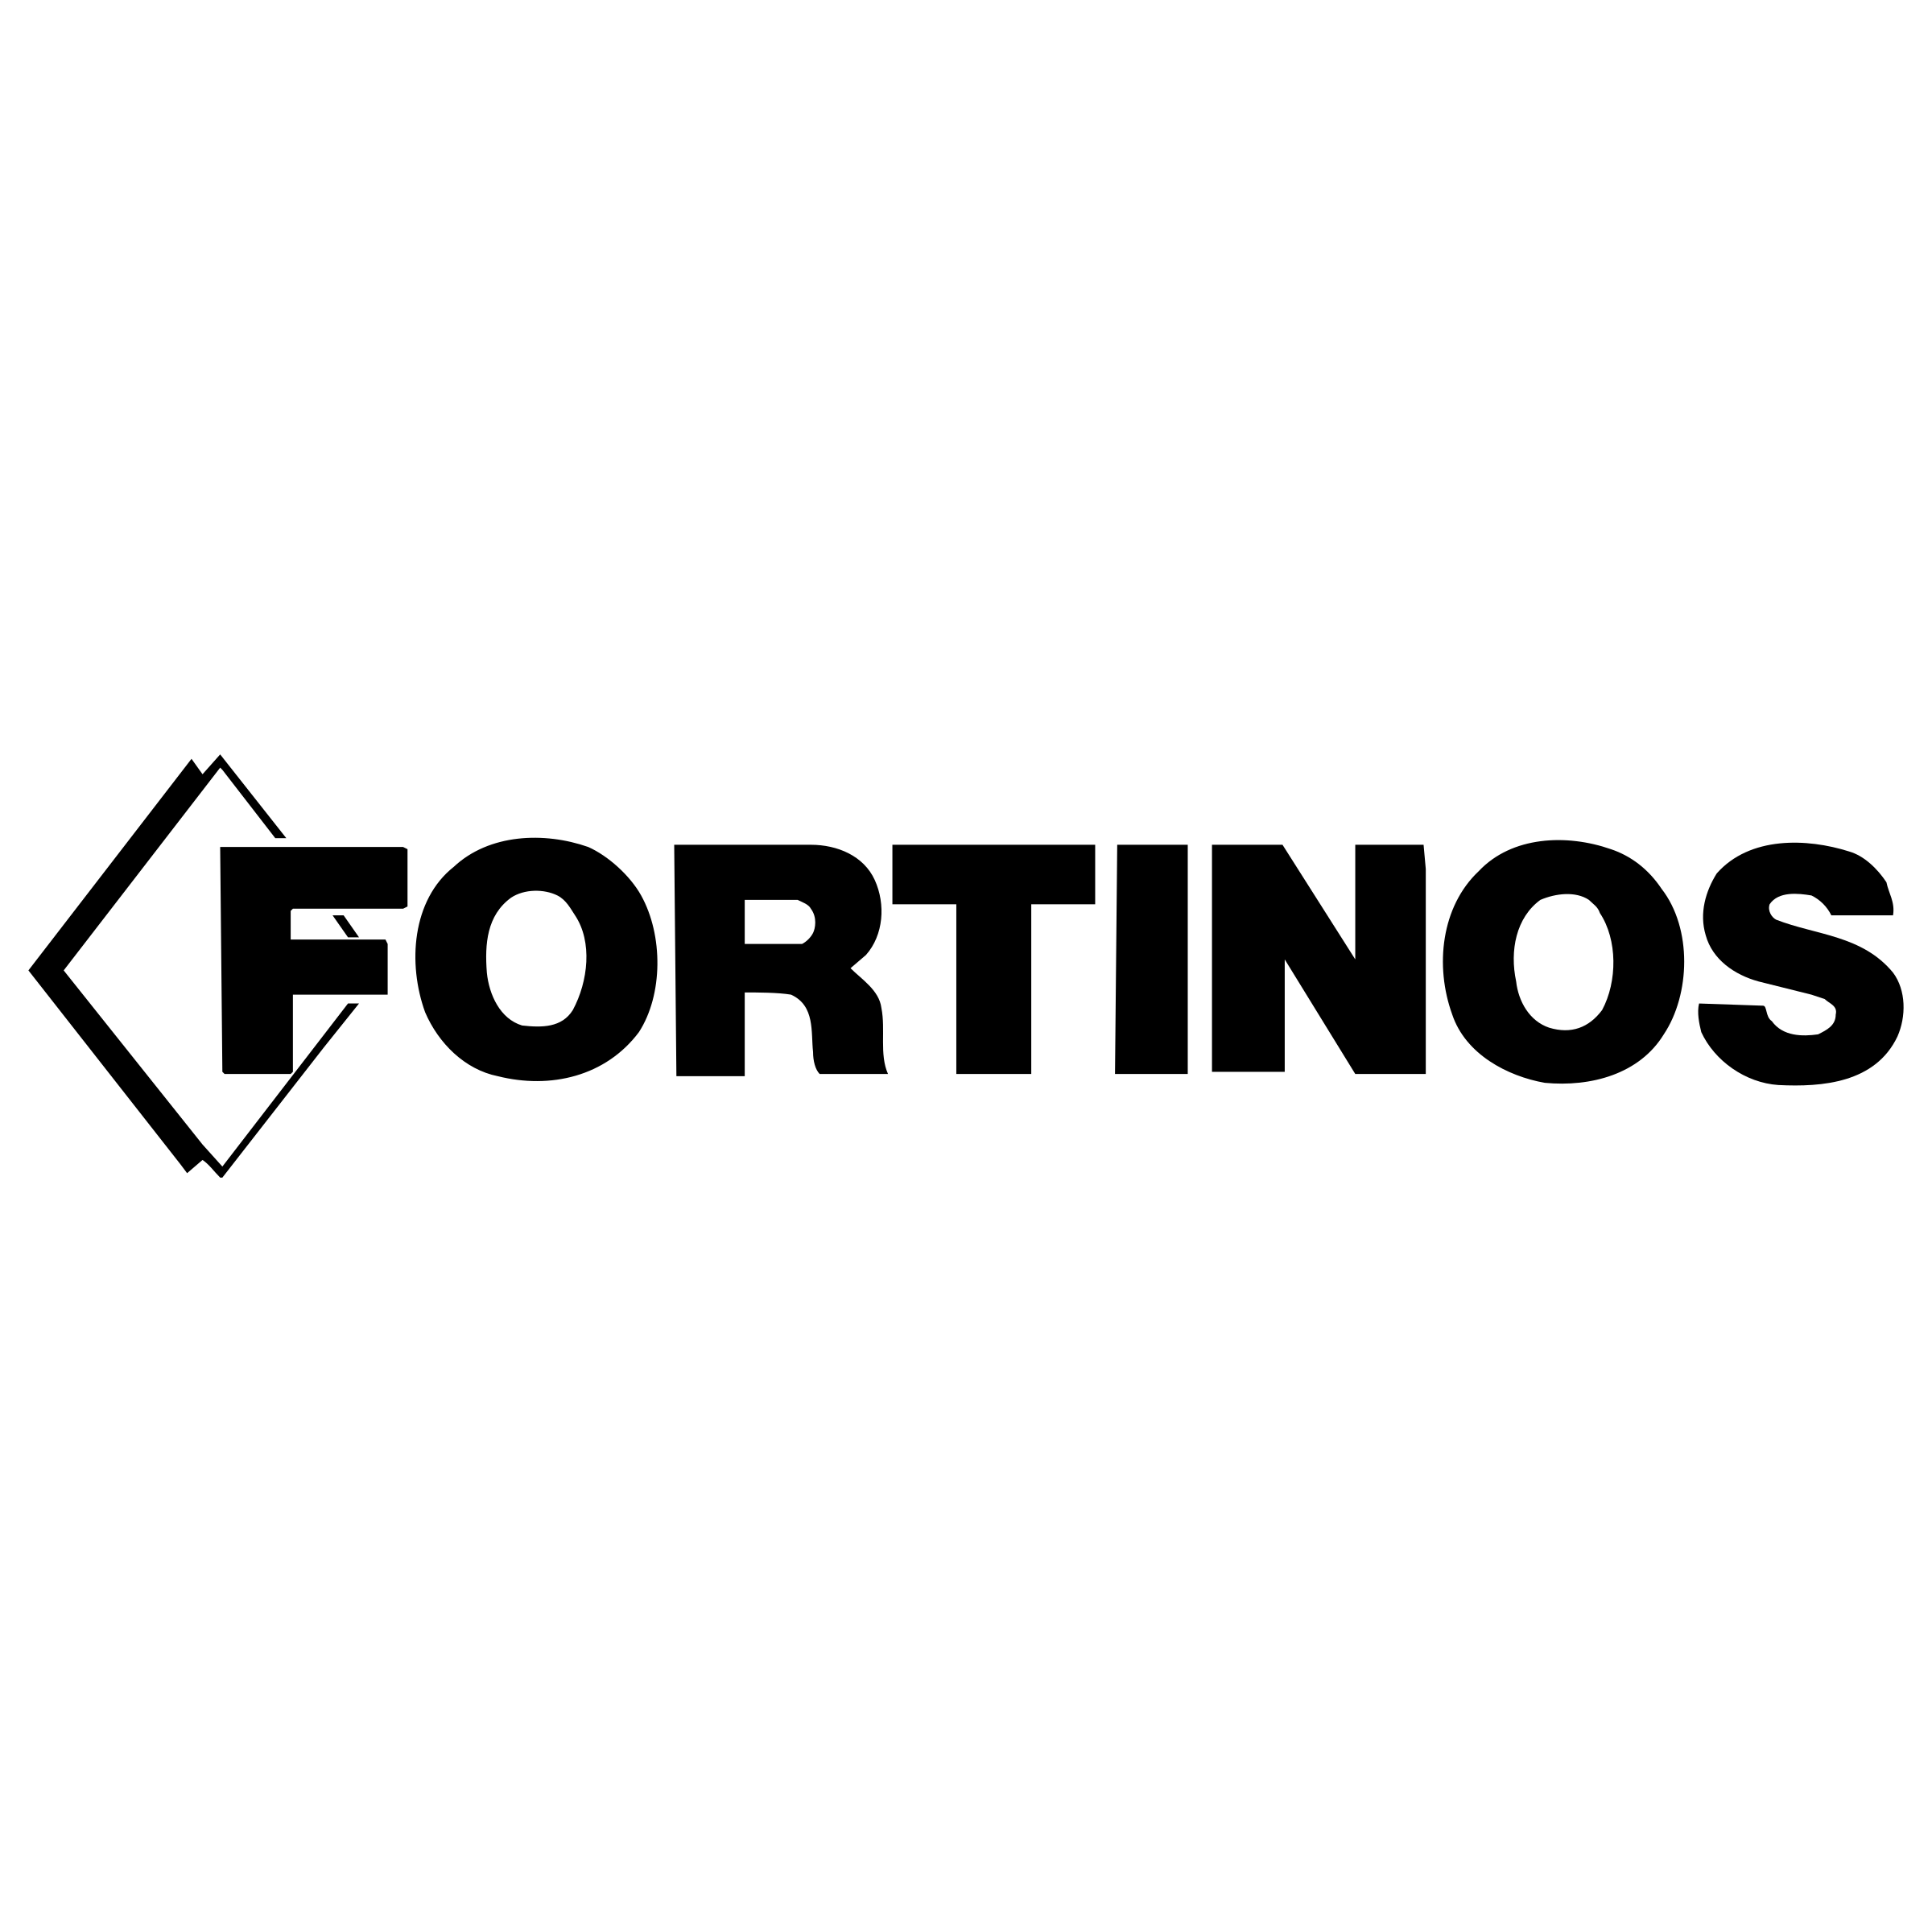 Fortinos Logo - Fortinos Logo PNG Transparent & SVG Vector - Freebie Supply